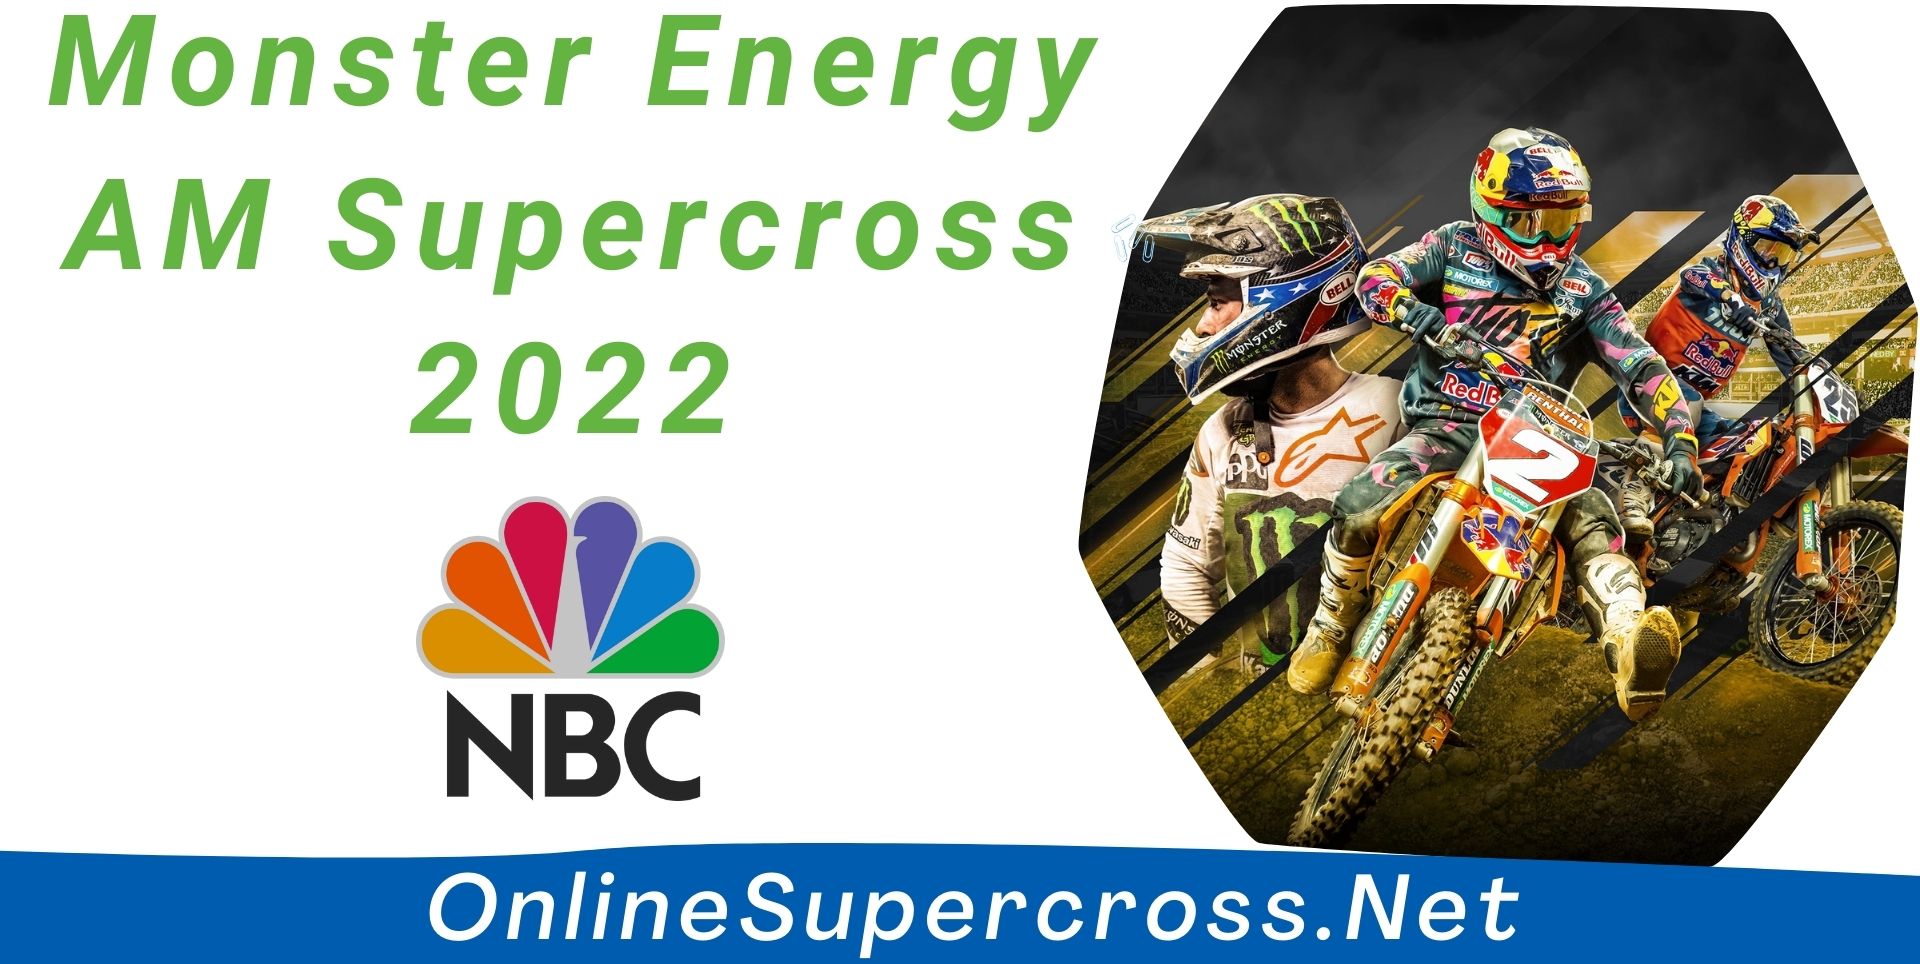 ama-supercross-broadcast-by-nbc